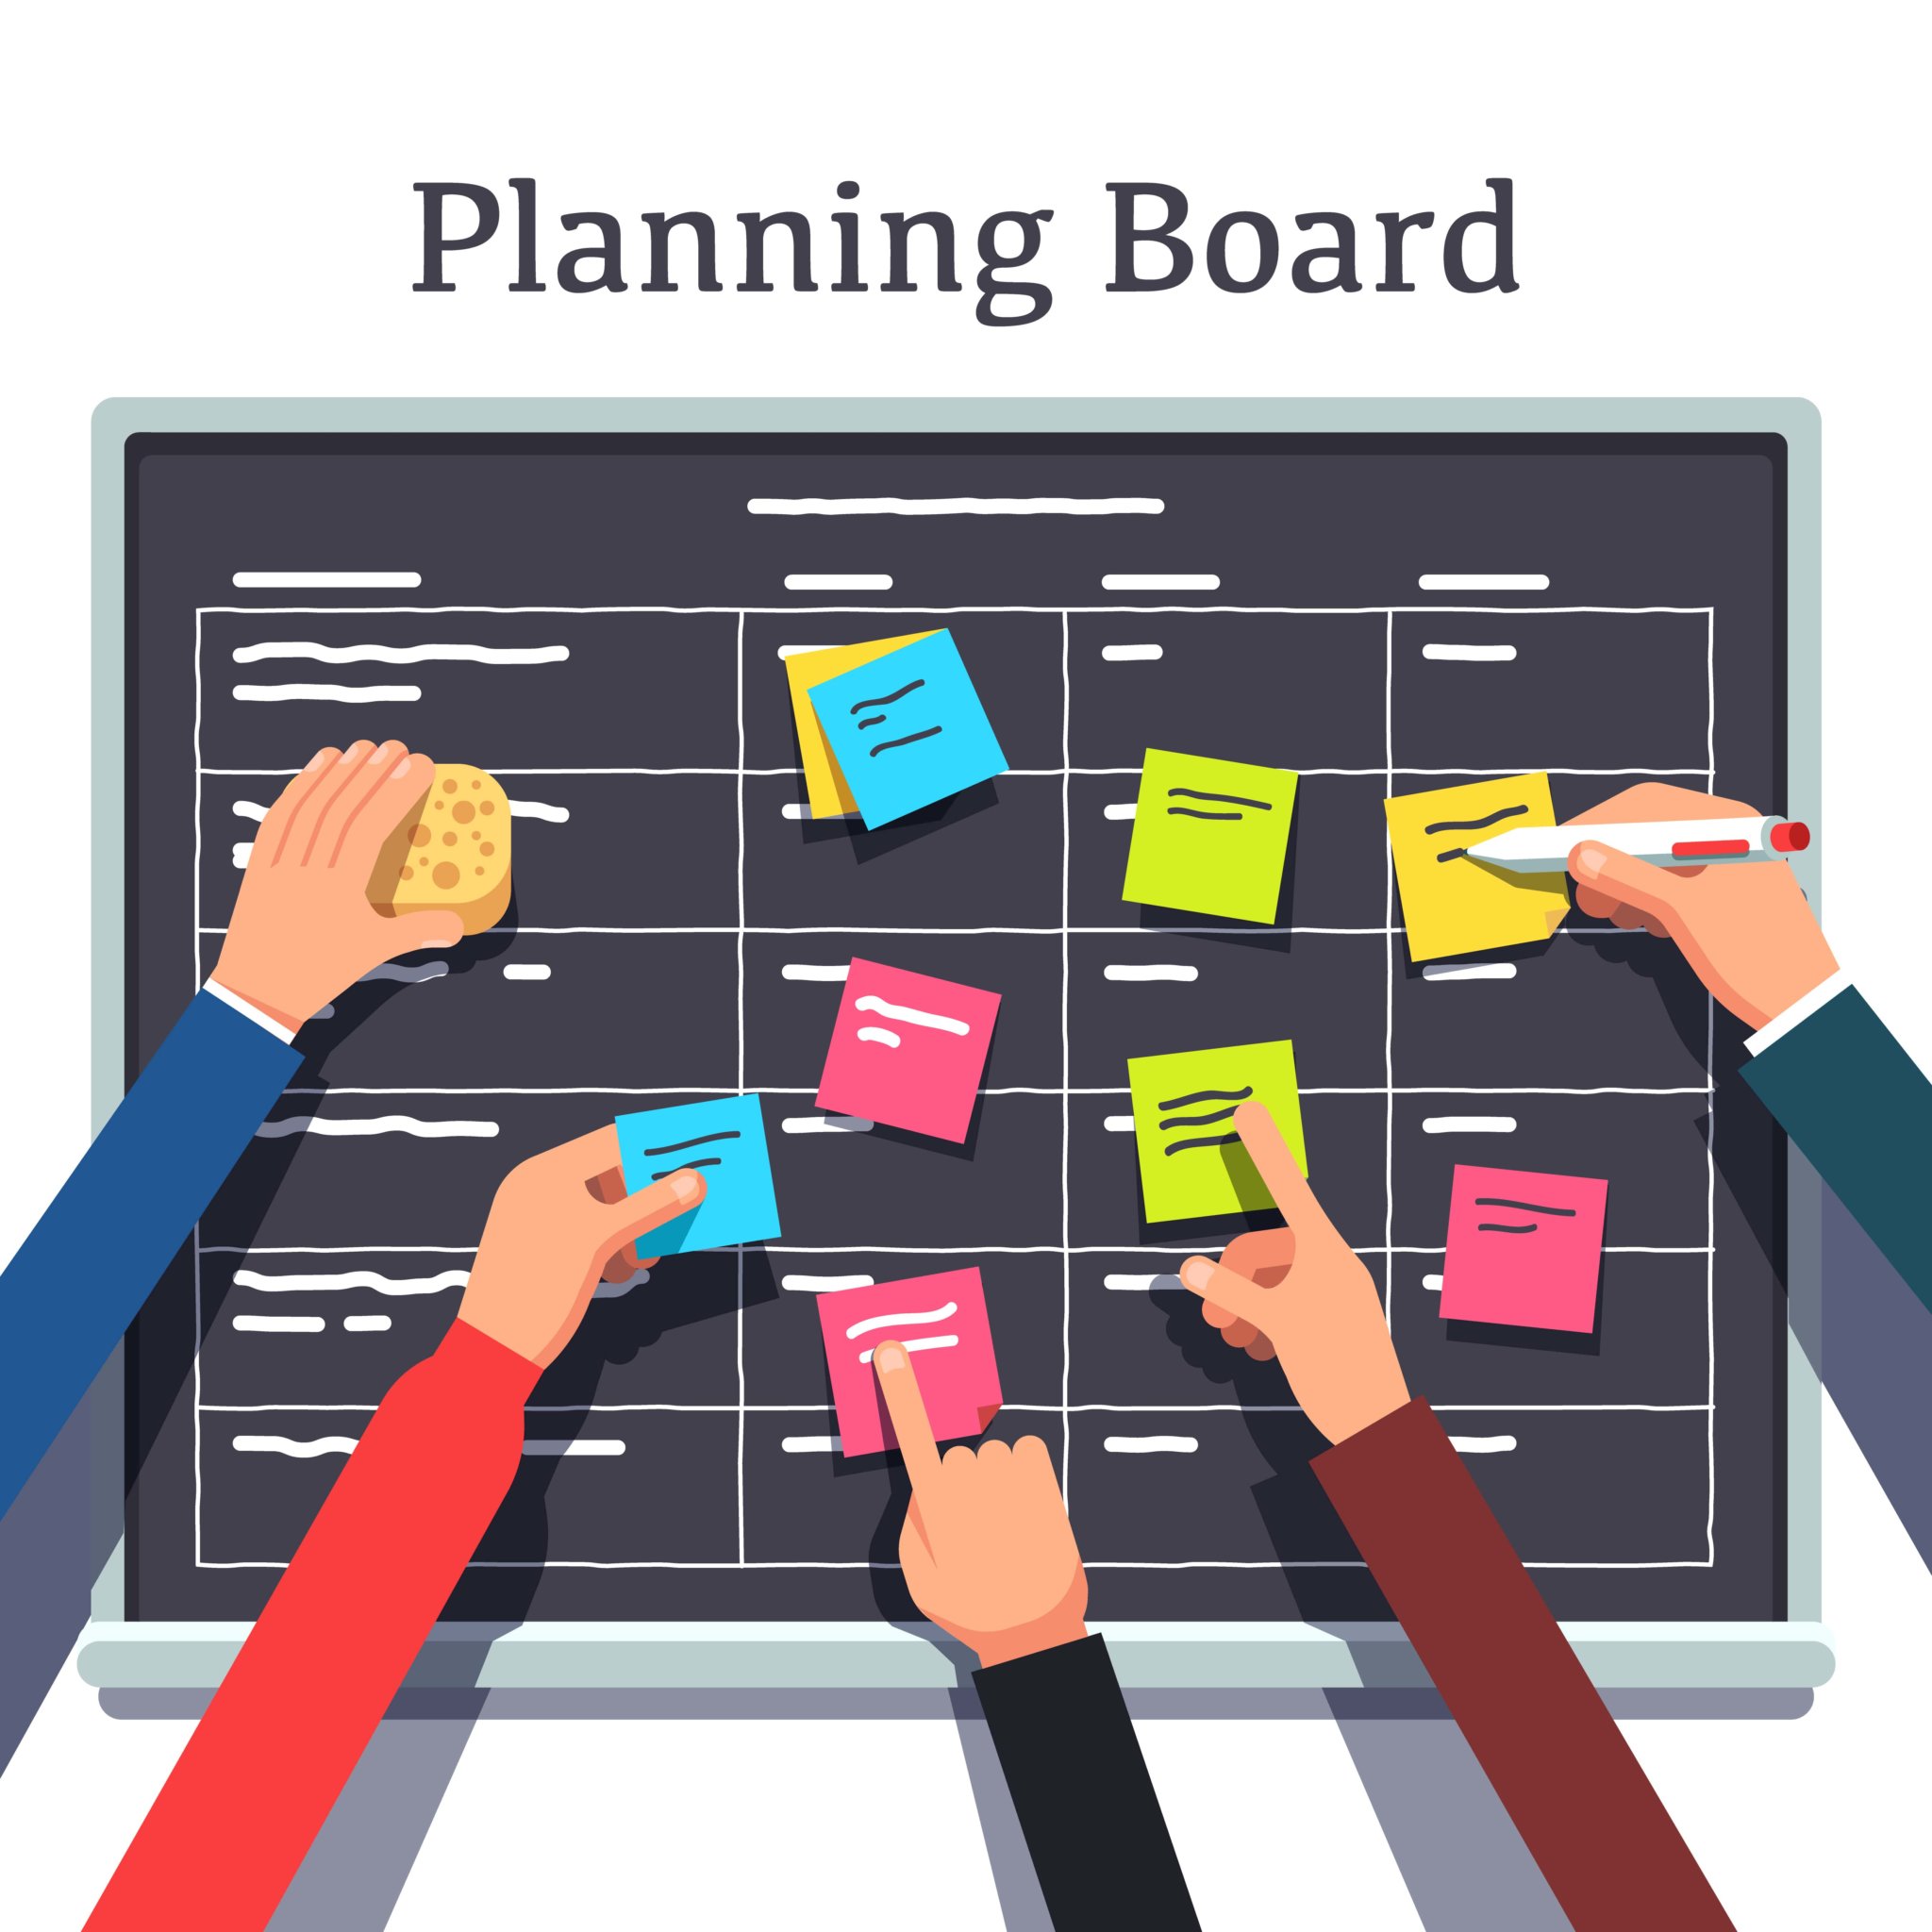 project planning methodology involves